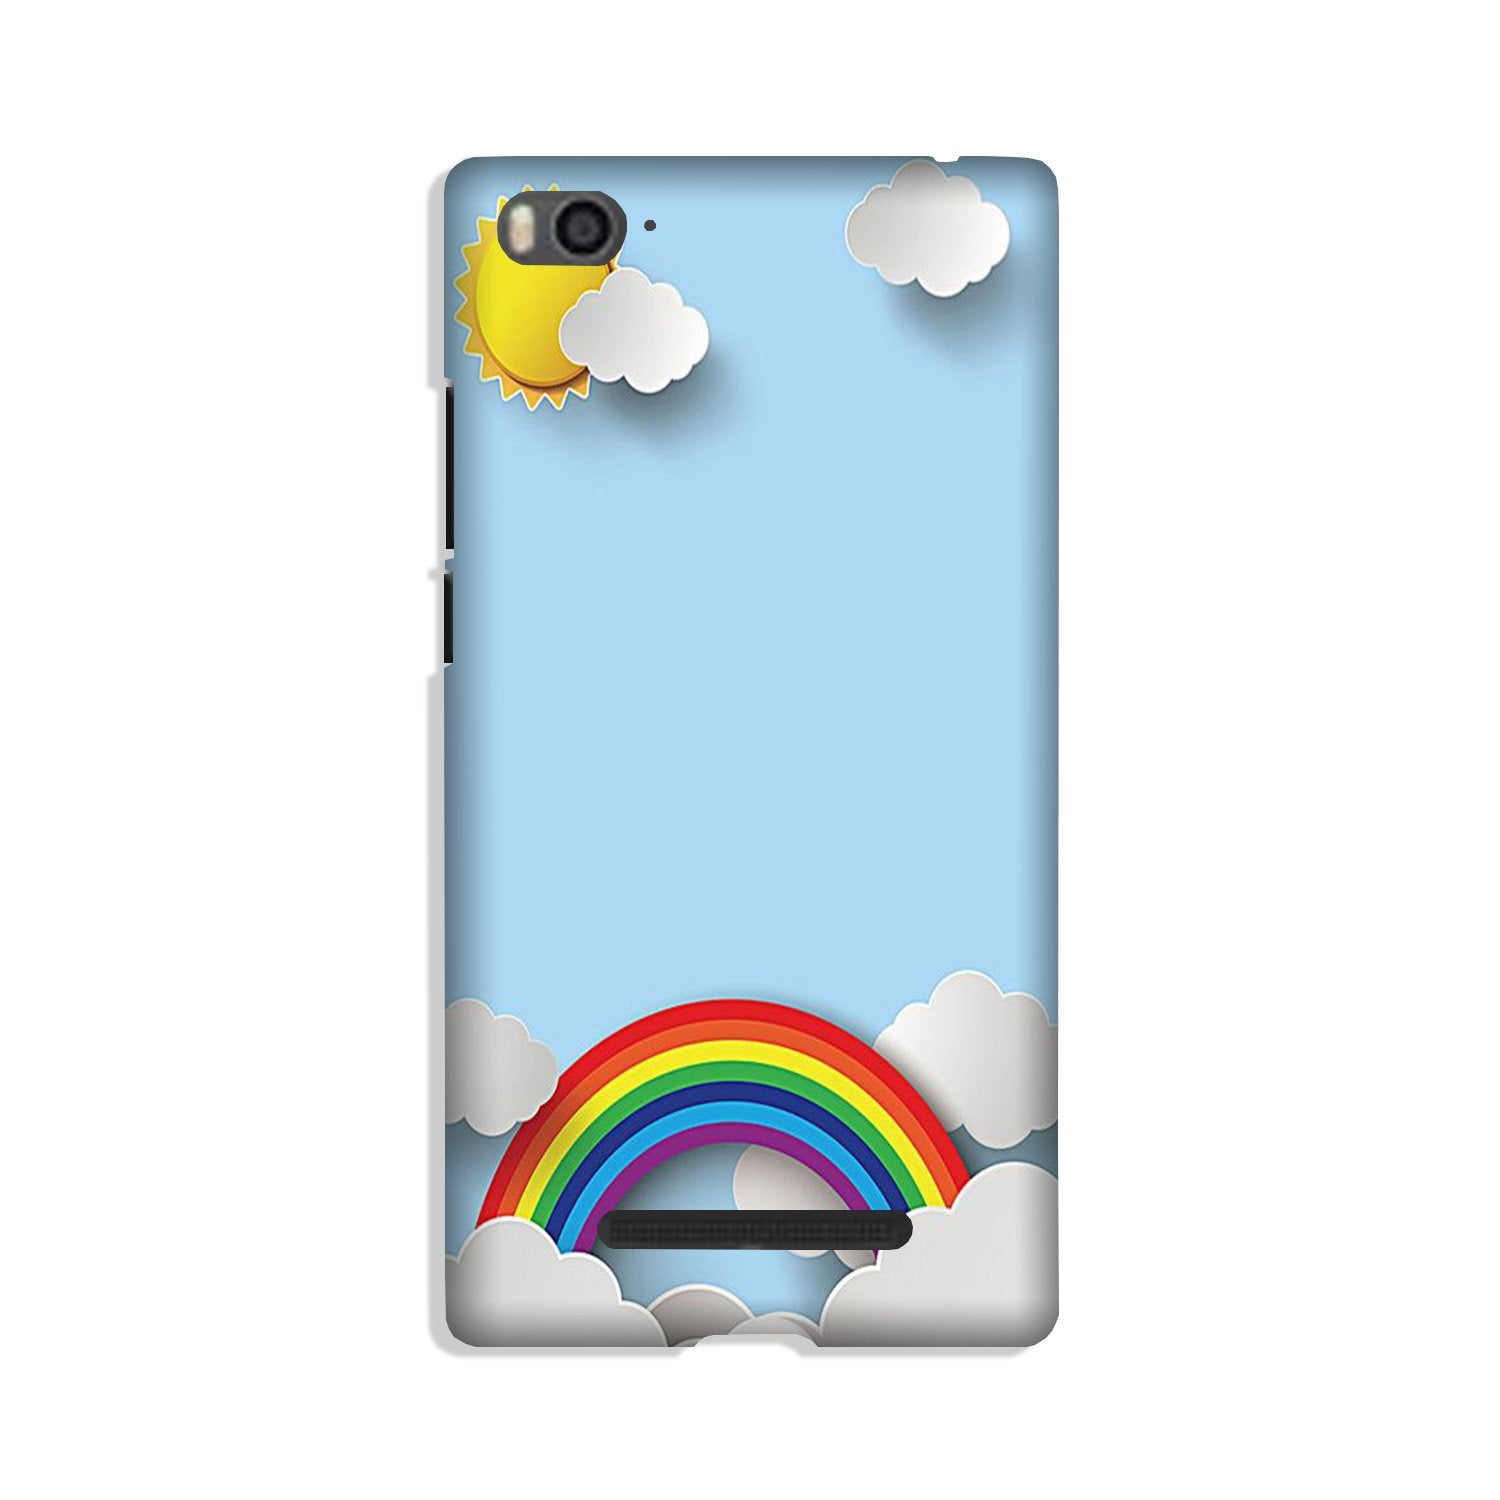 Rainbow Case for Xiaomi Mi 4i (Design No. 225)